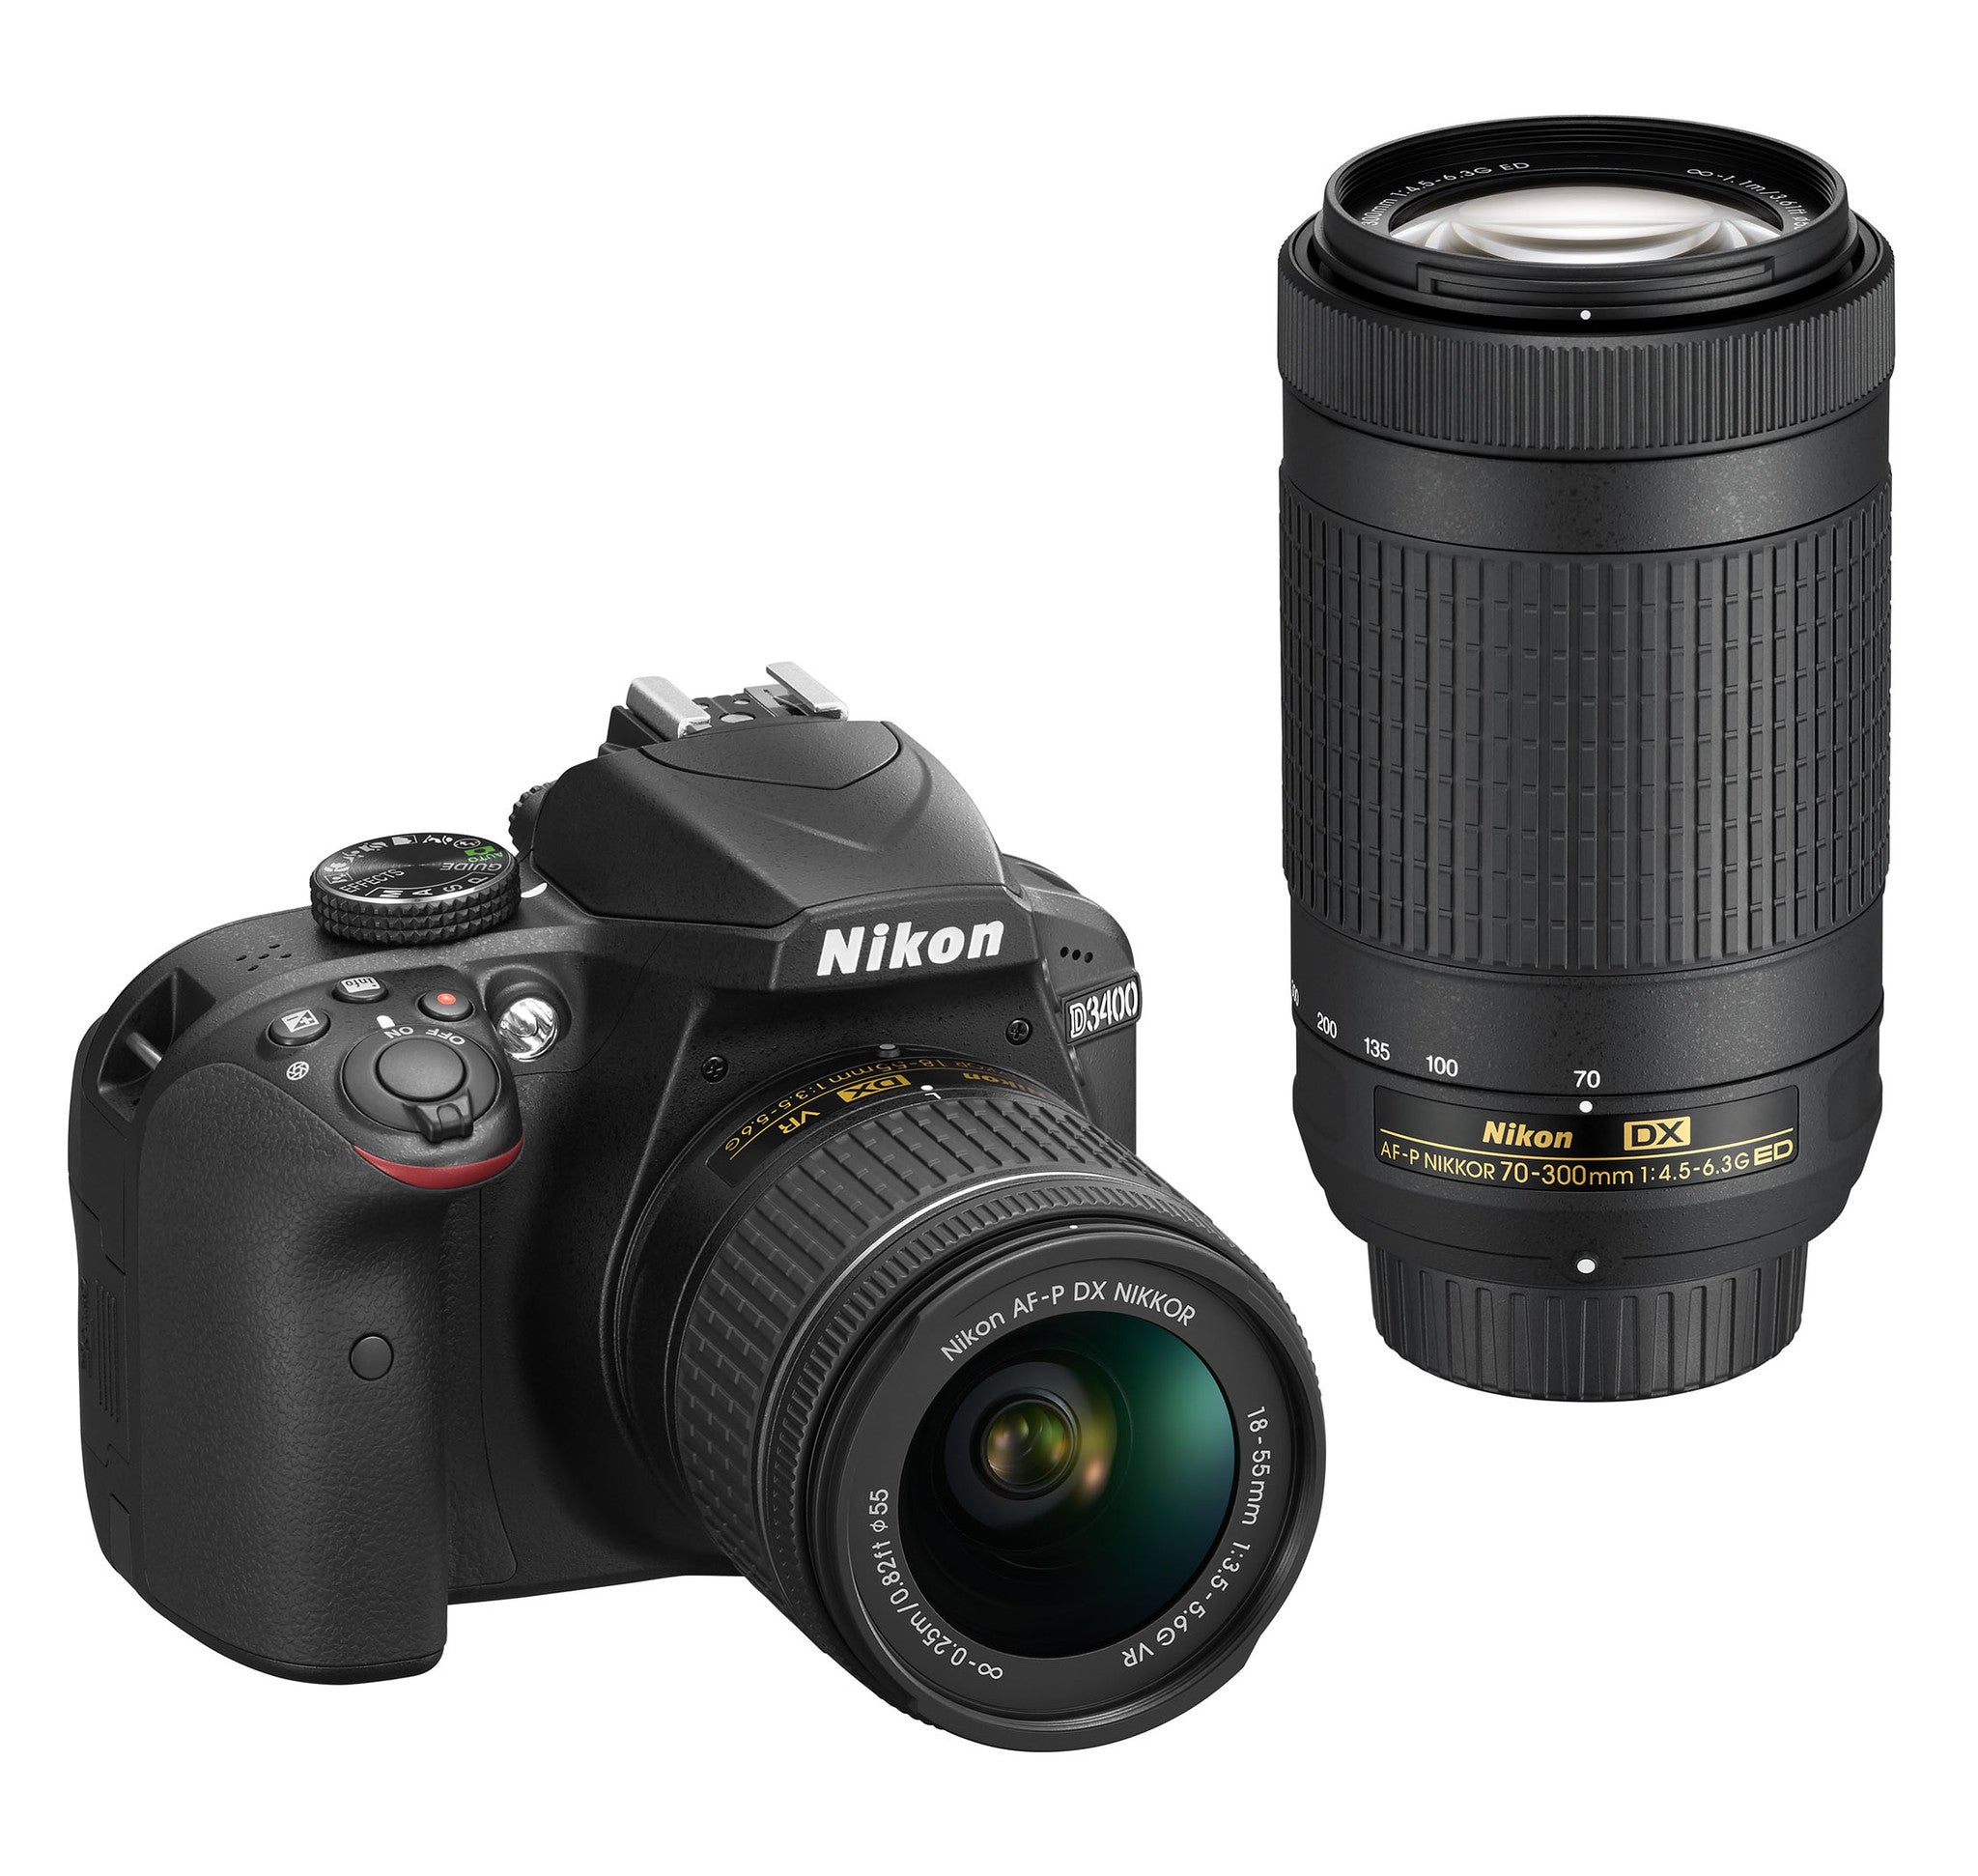 Nikon D3400 Digital SLR Camera 2 Lens Kit (18-55mm 70-300mm), camera dslr cameras, Nikon - Pictureline  - 1